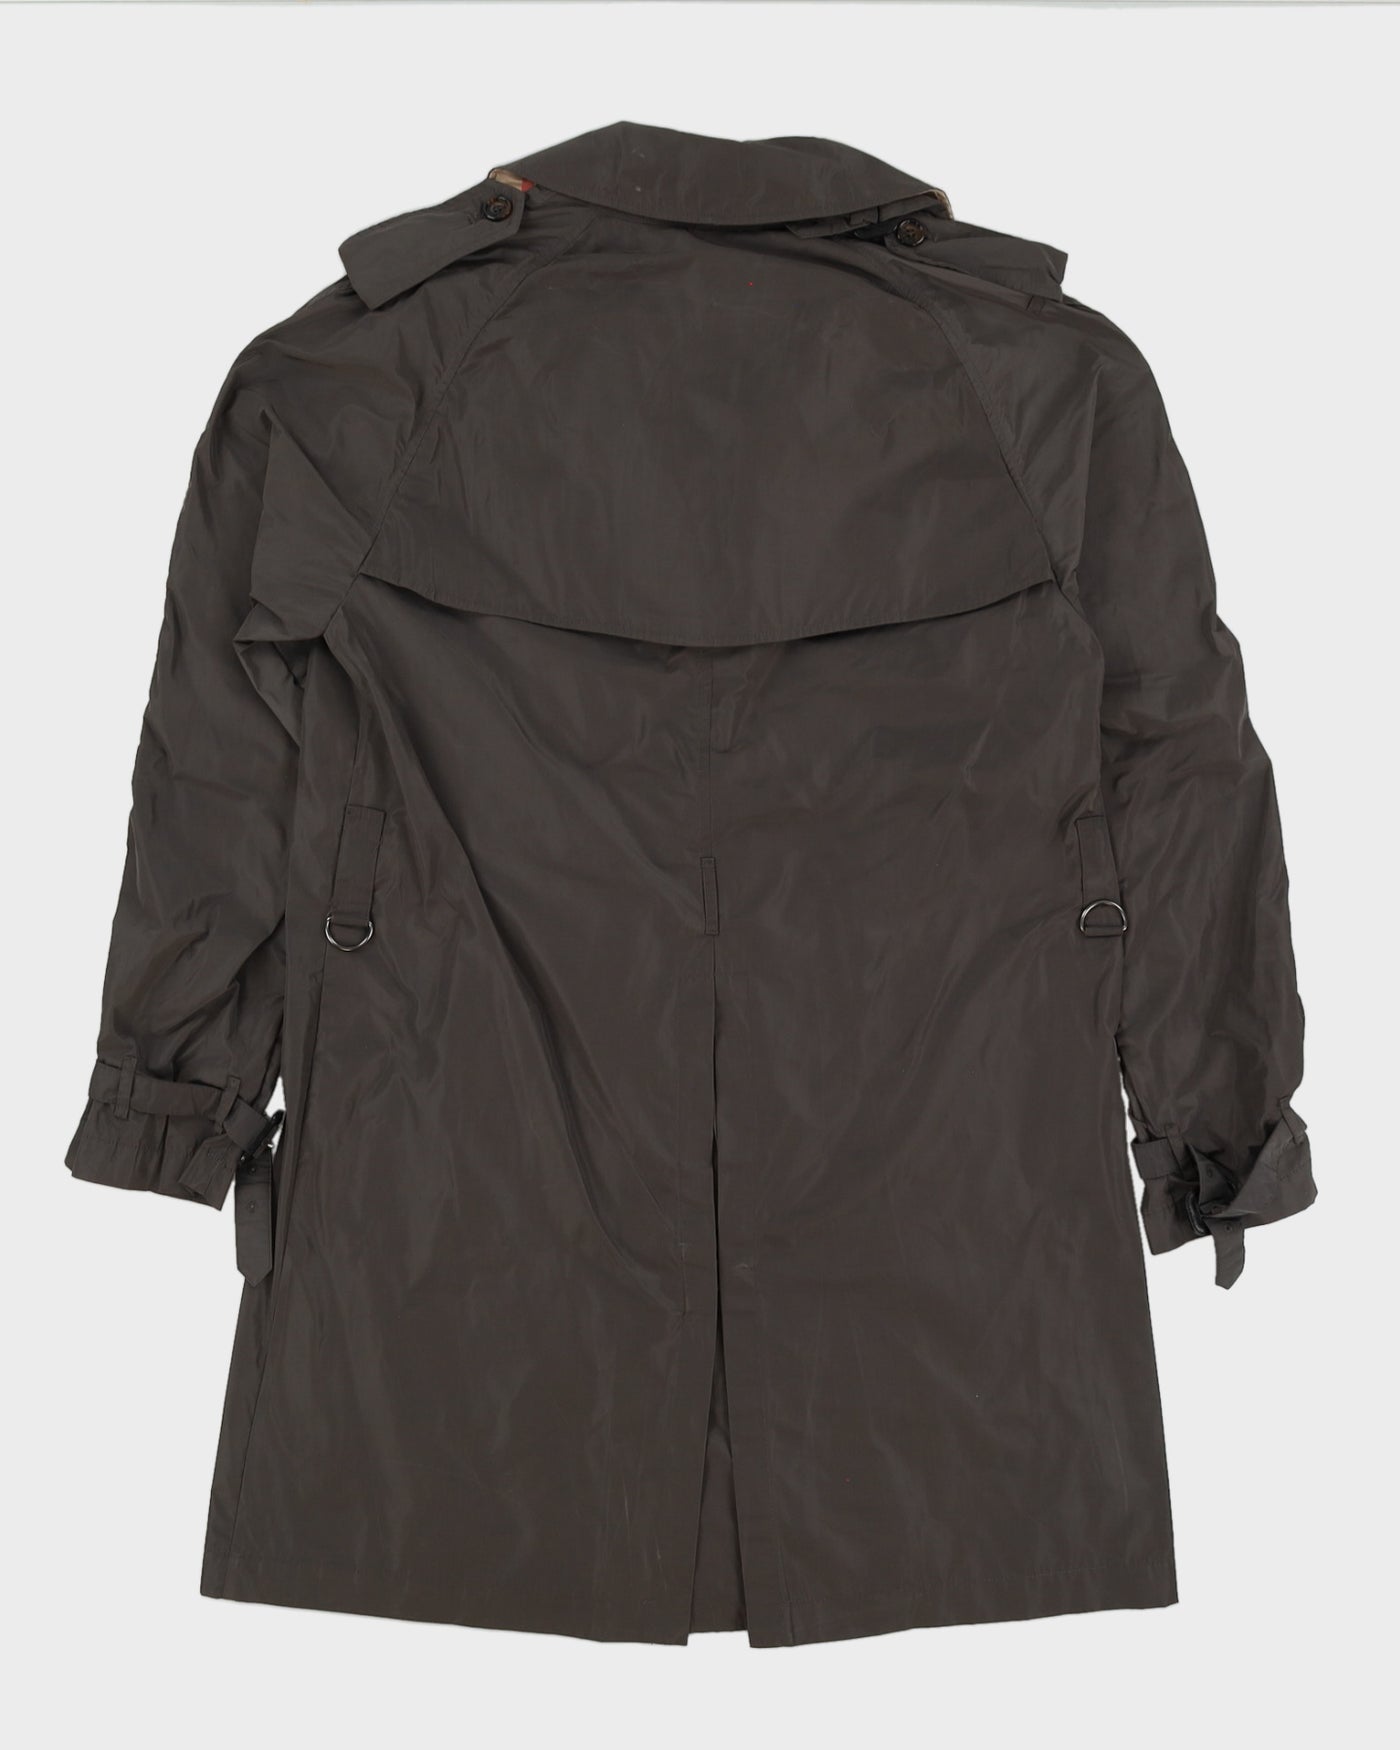 Burberry London Grey Raincoat Mac - M / L